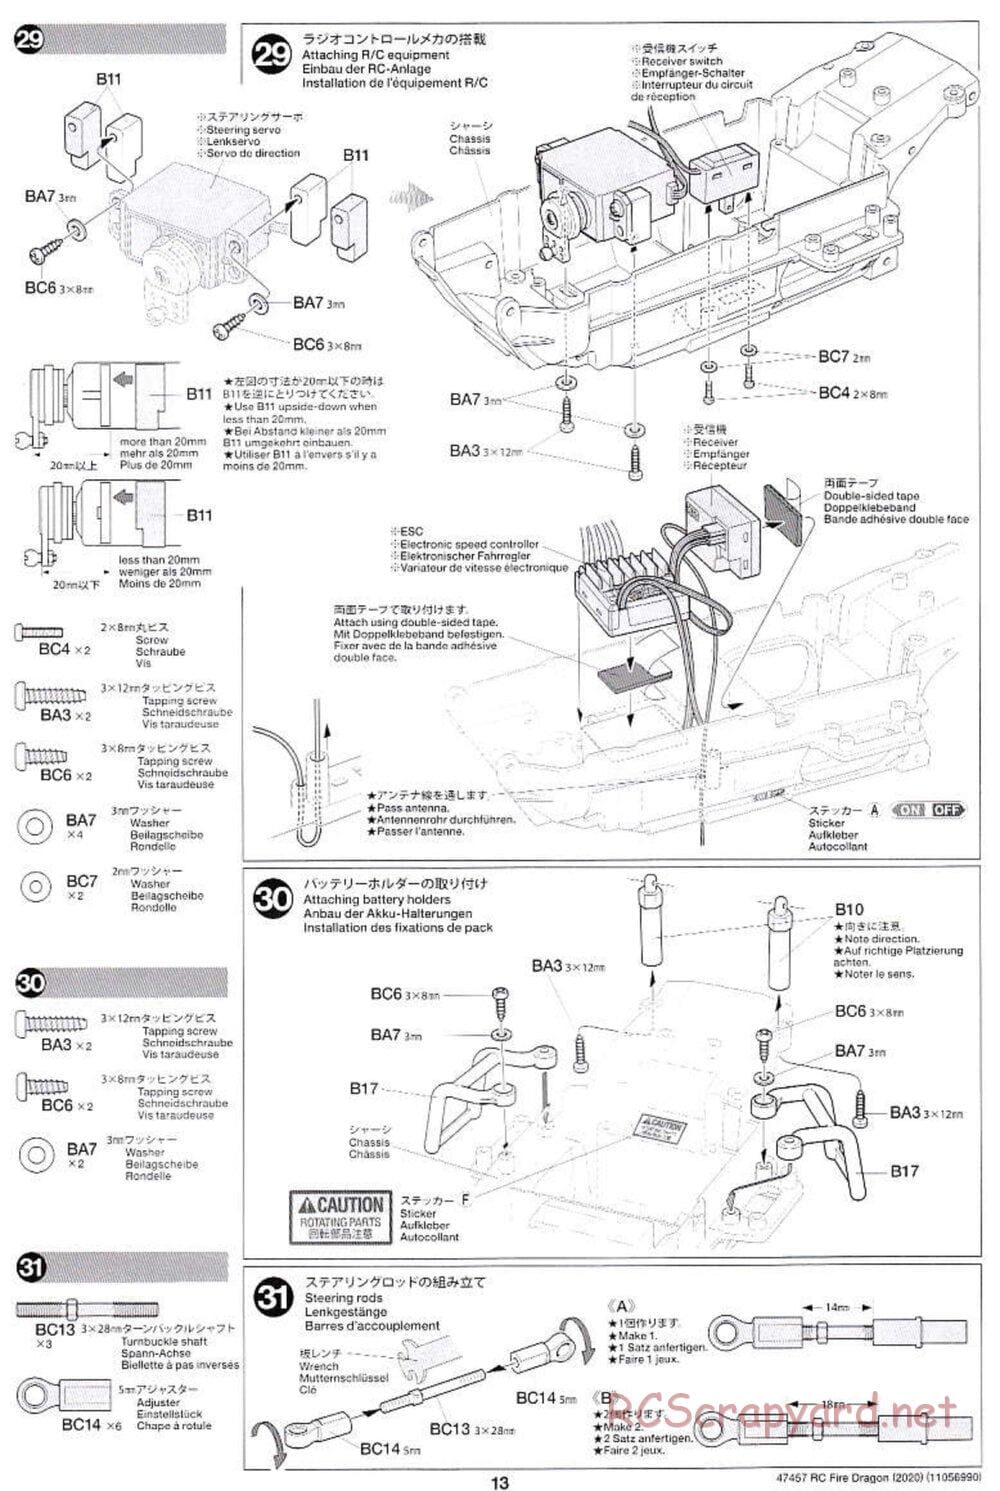 Tamiya - Fire Dragon (2020) Chassis - Manual - Page 13